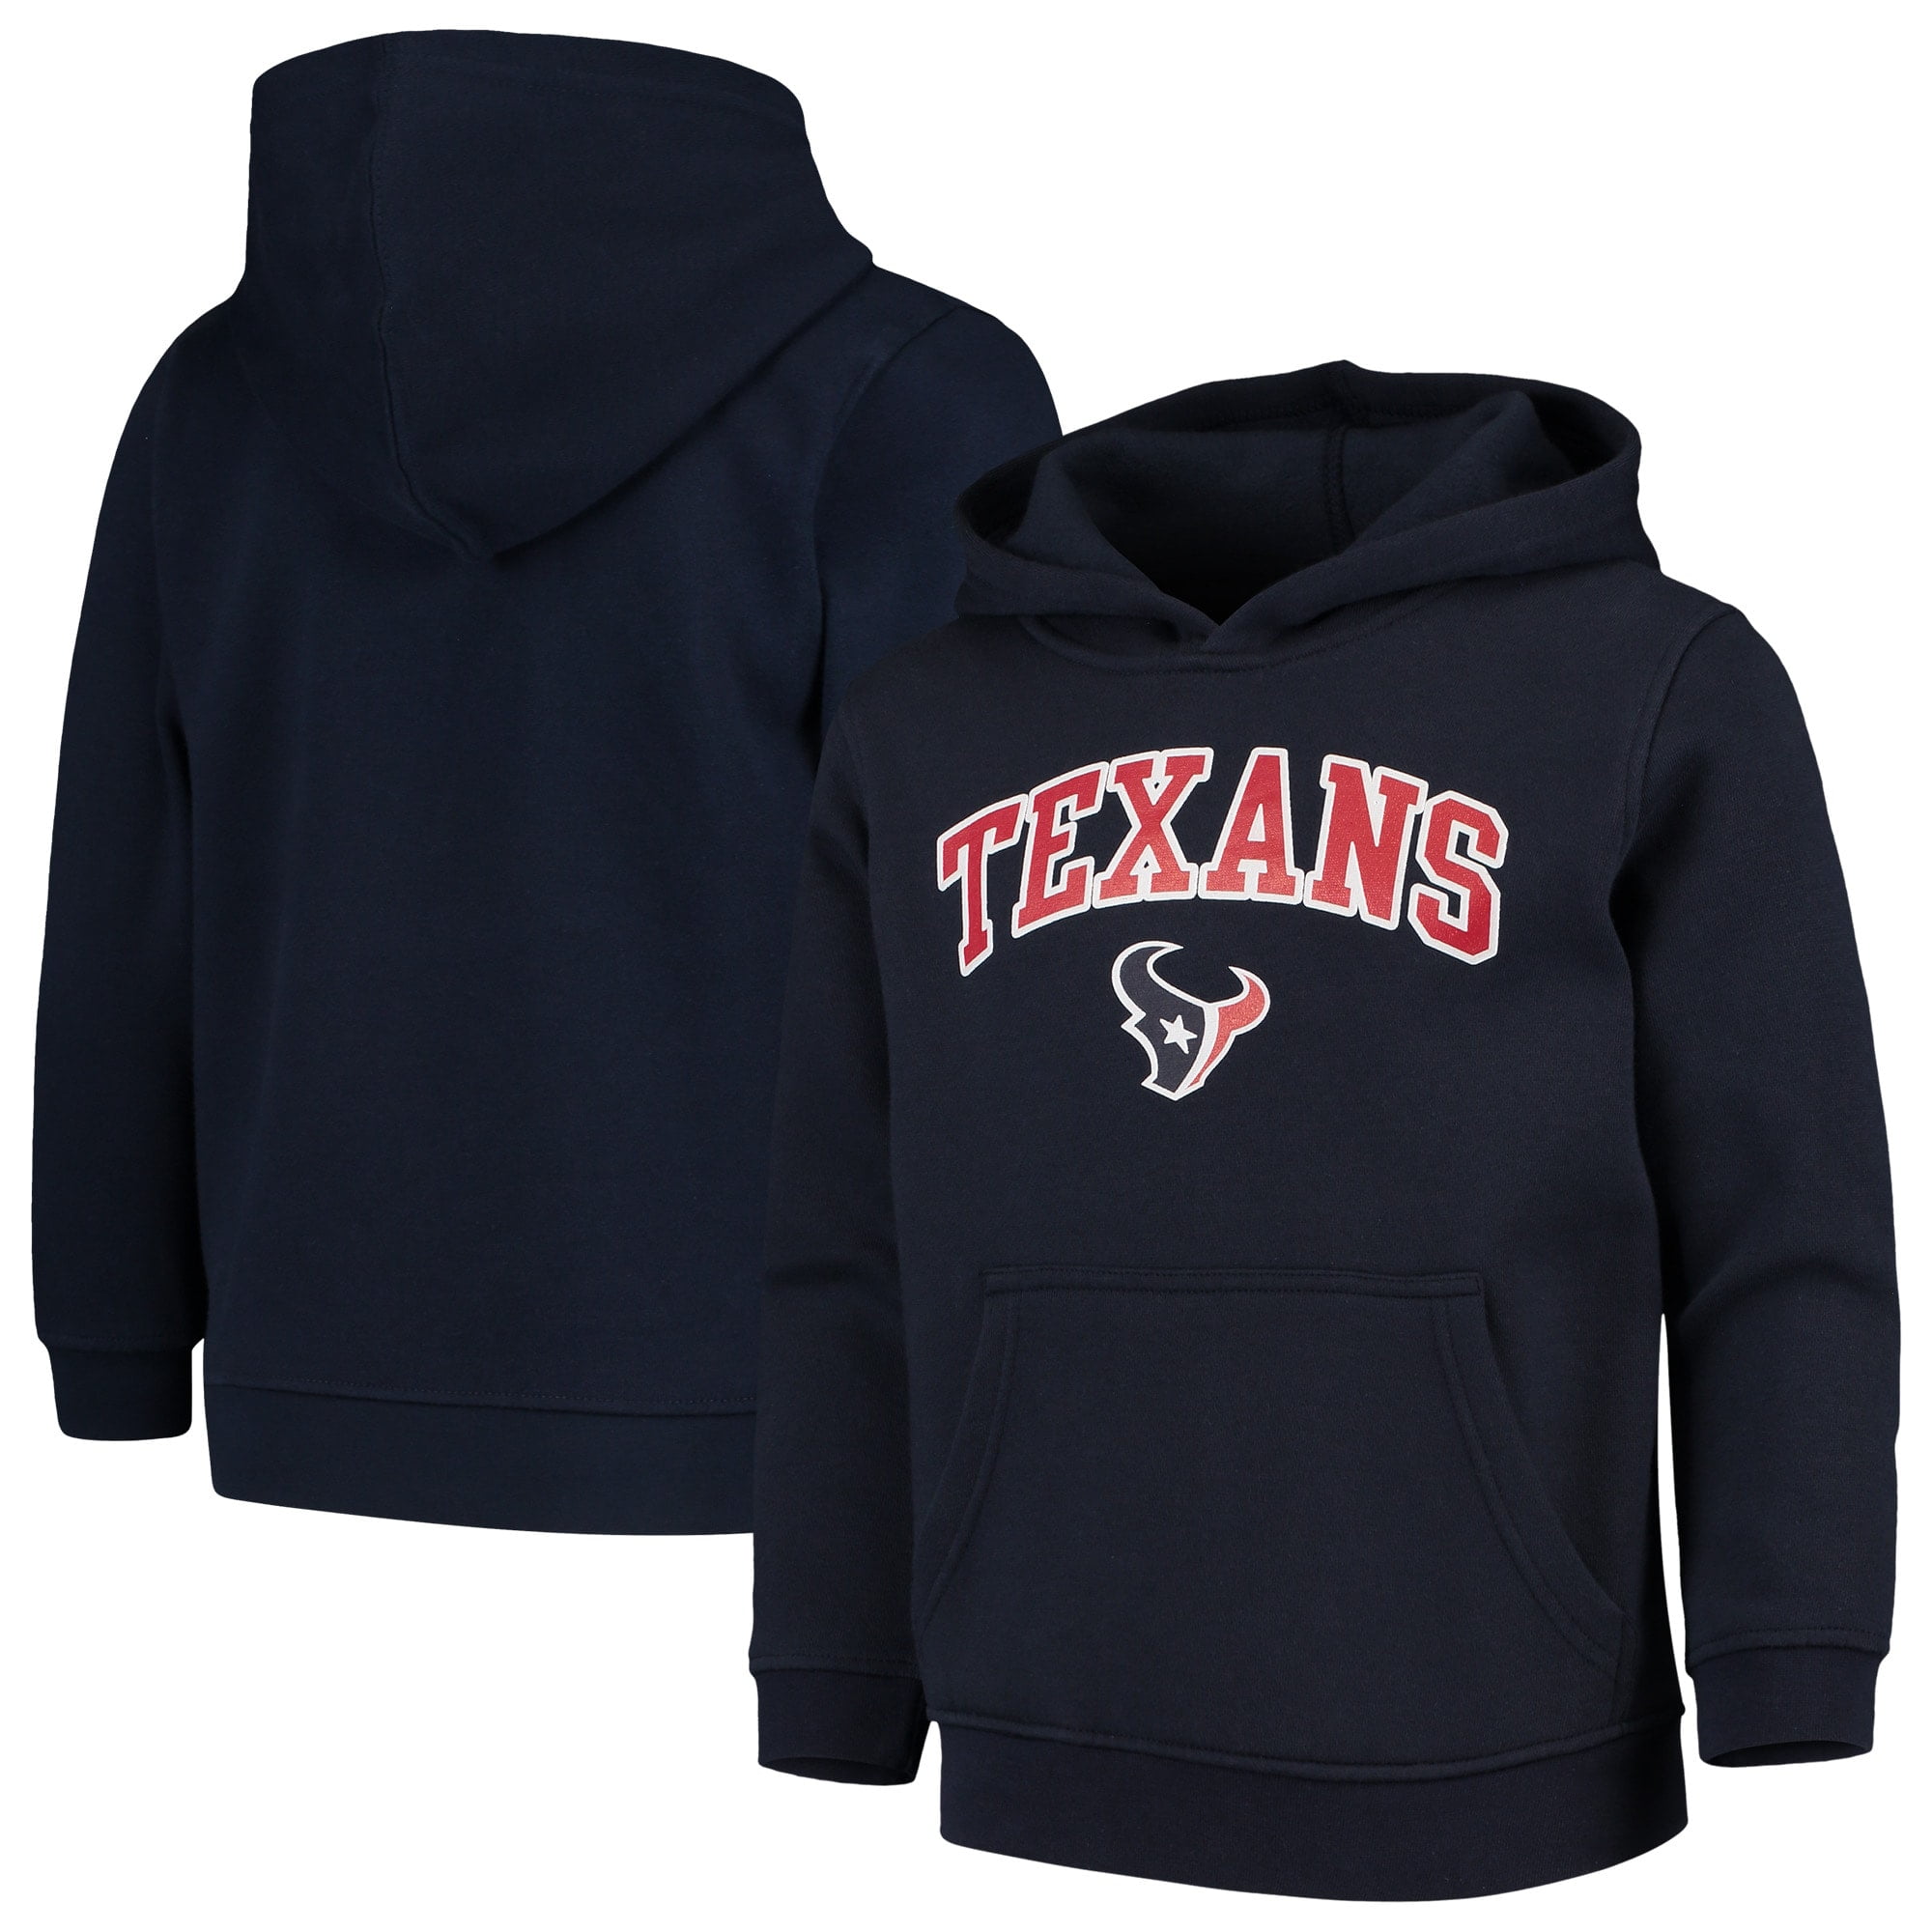 Houston Texans Sweatshirts - Walmart.com